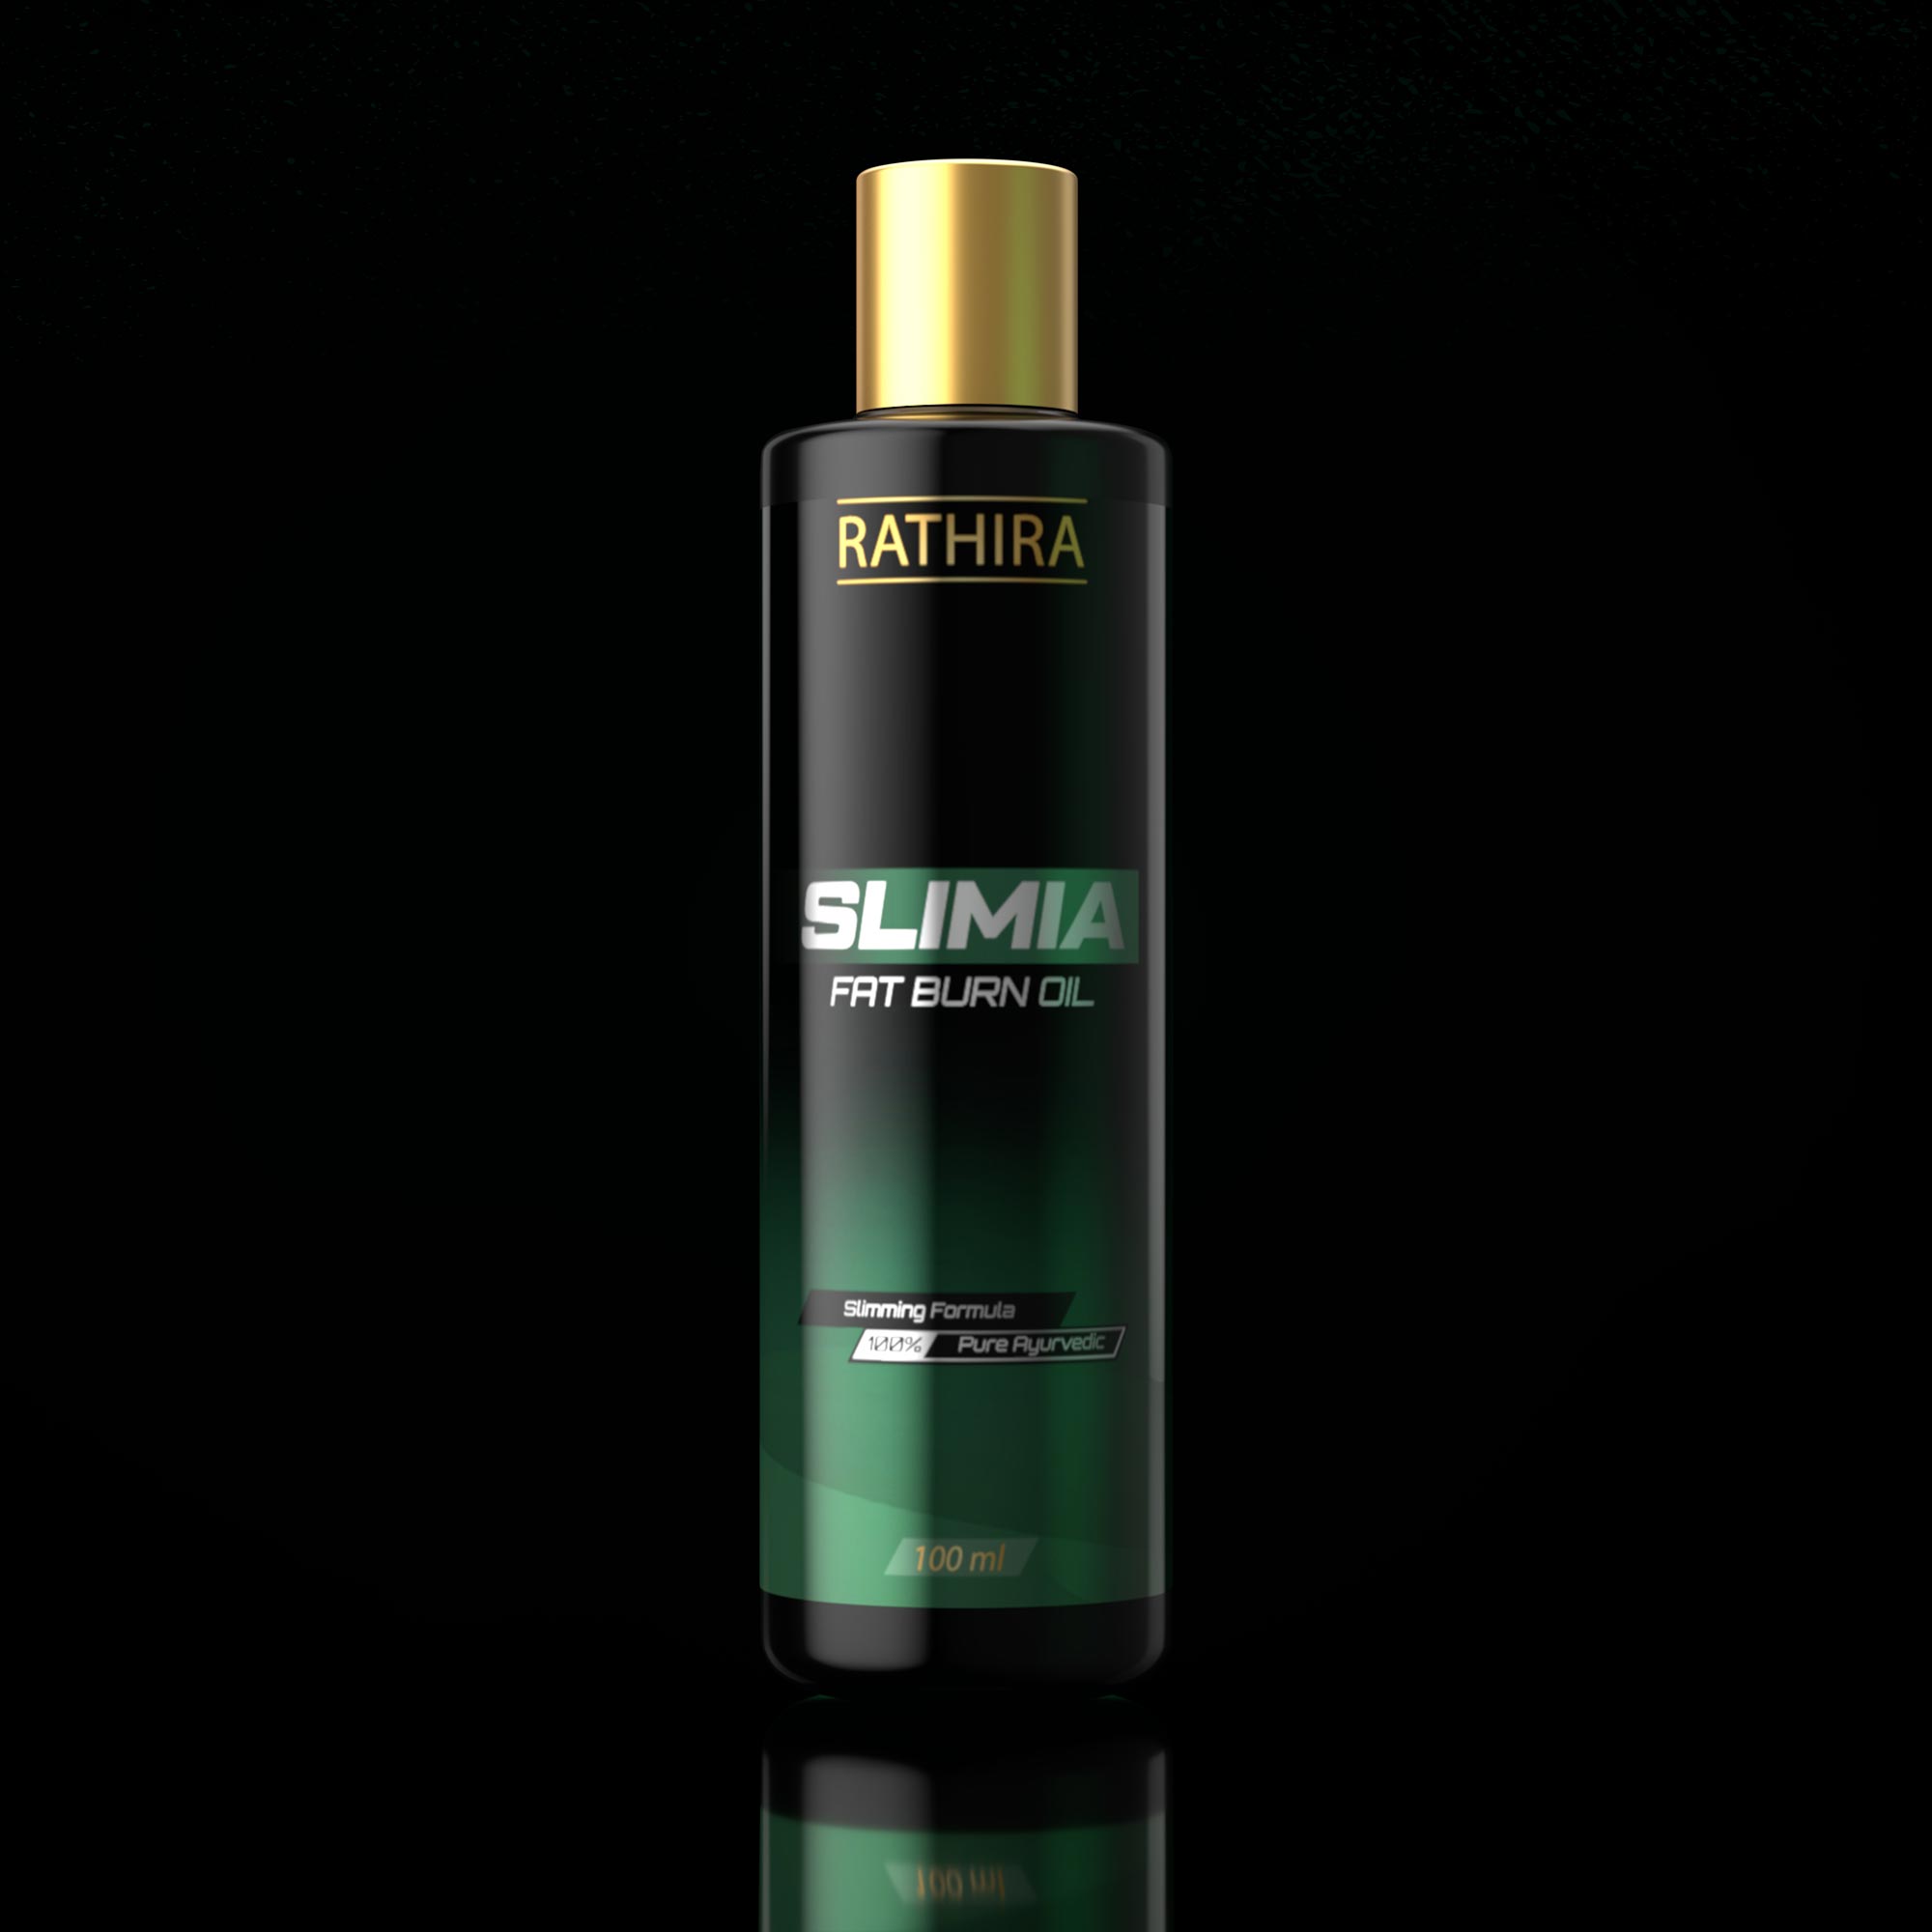 Slimia Product